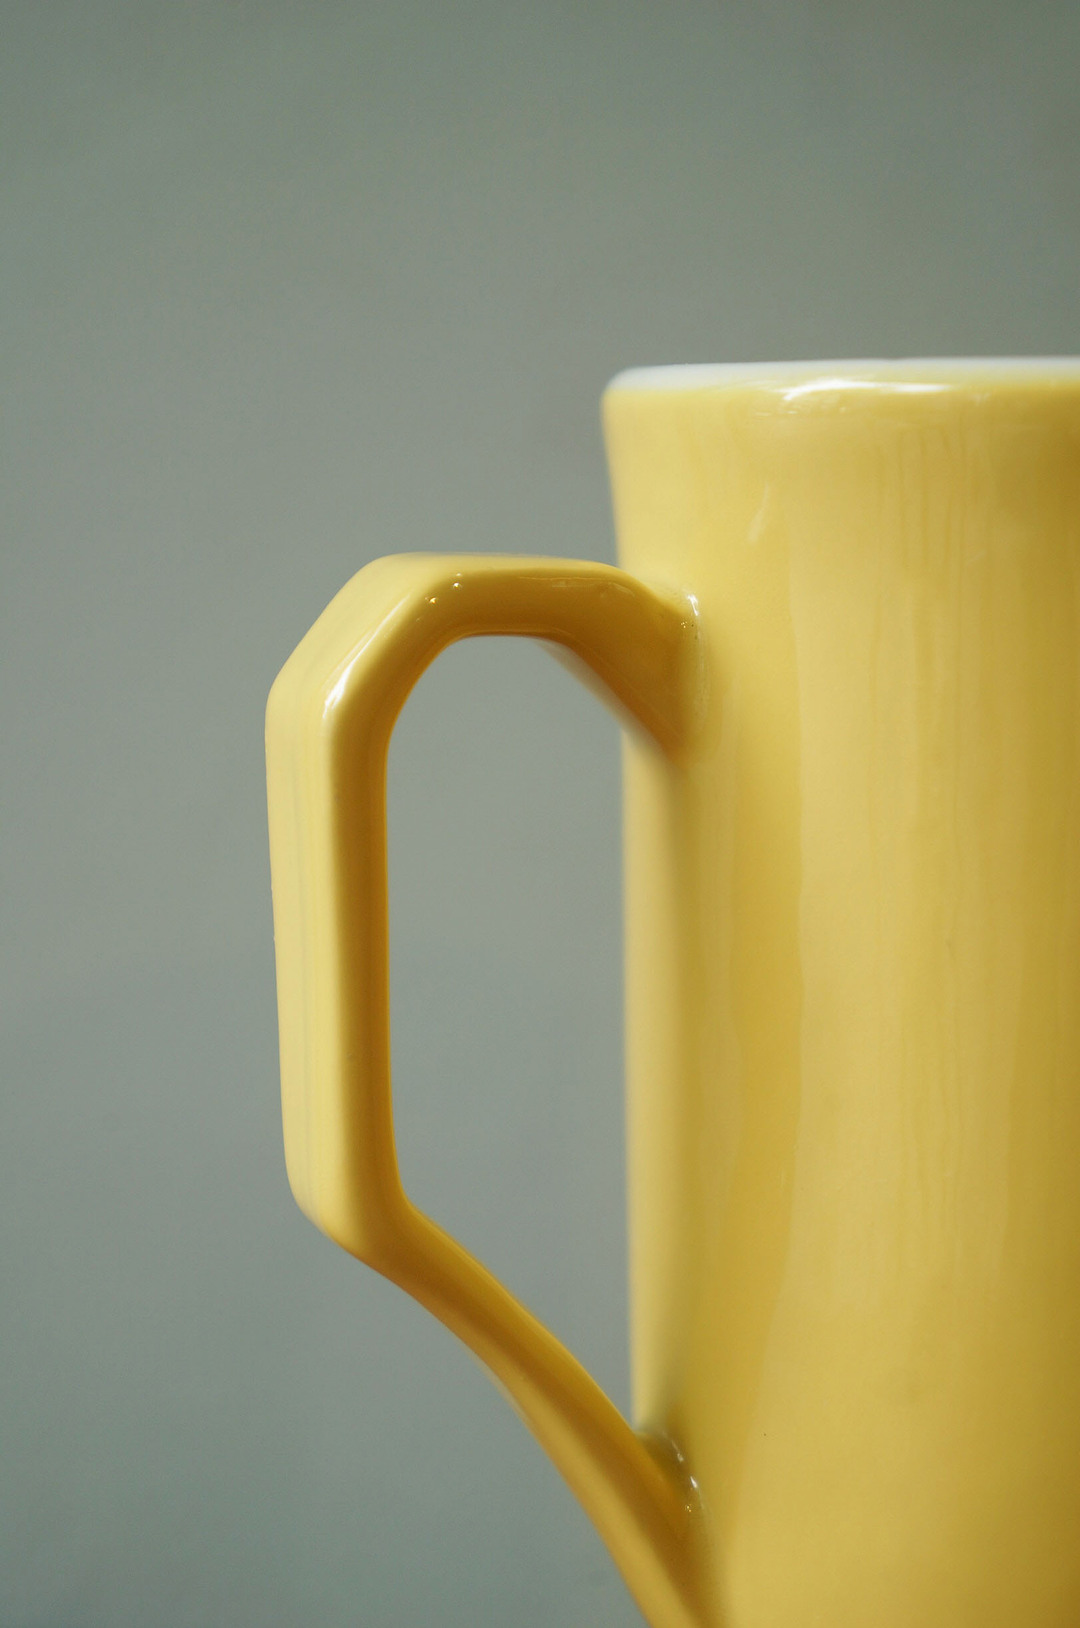 US Vintage Shenango Pedestal Mug Cup/アメリカヴィンテージ シェナンゴ マグカップ 陶器 食器 ミッドセンチュリー レトロ 2